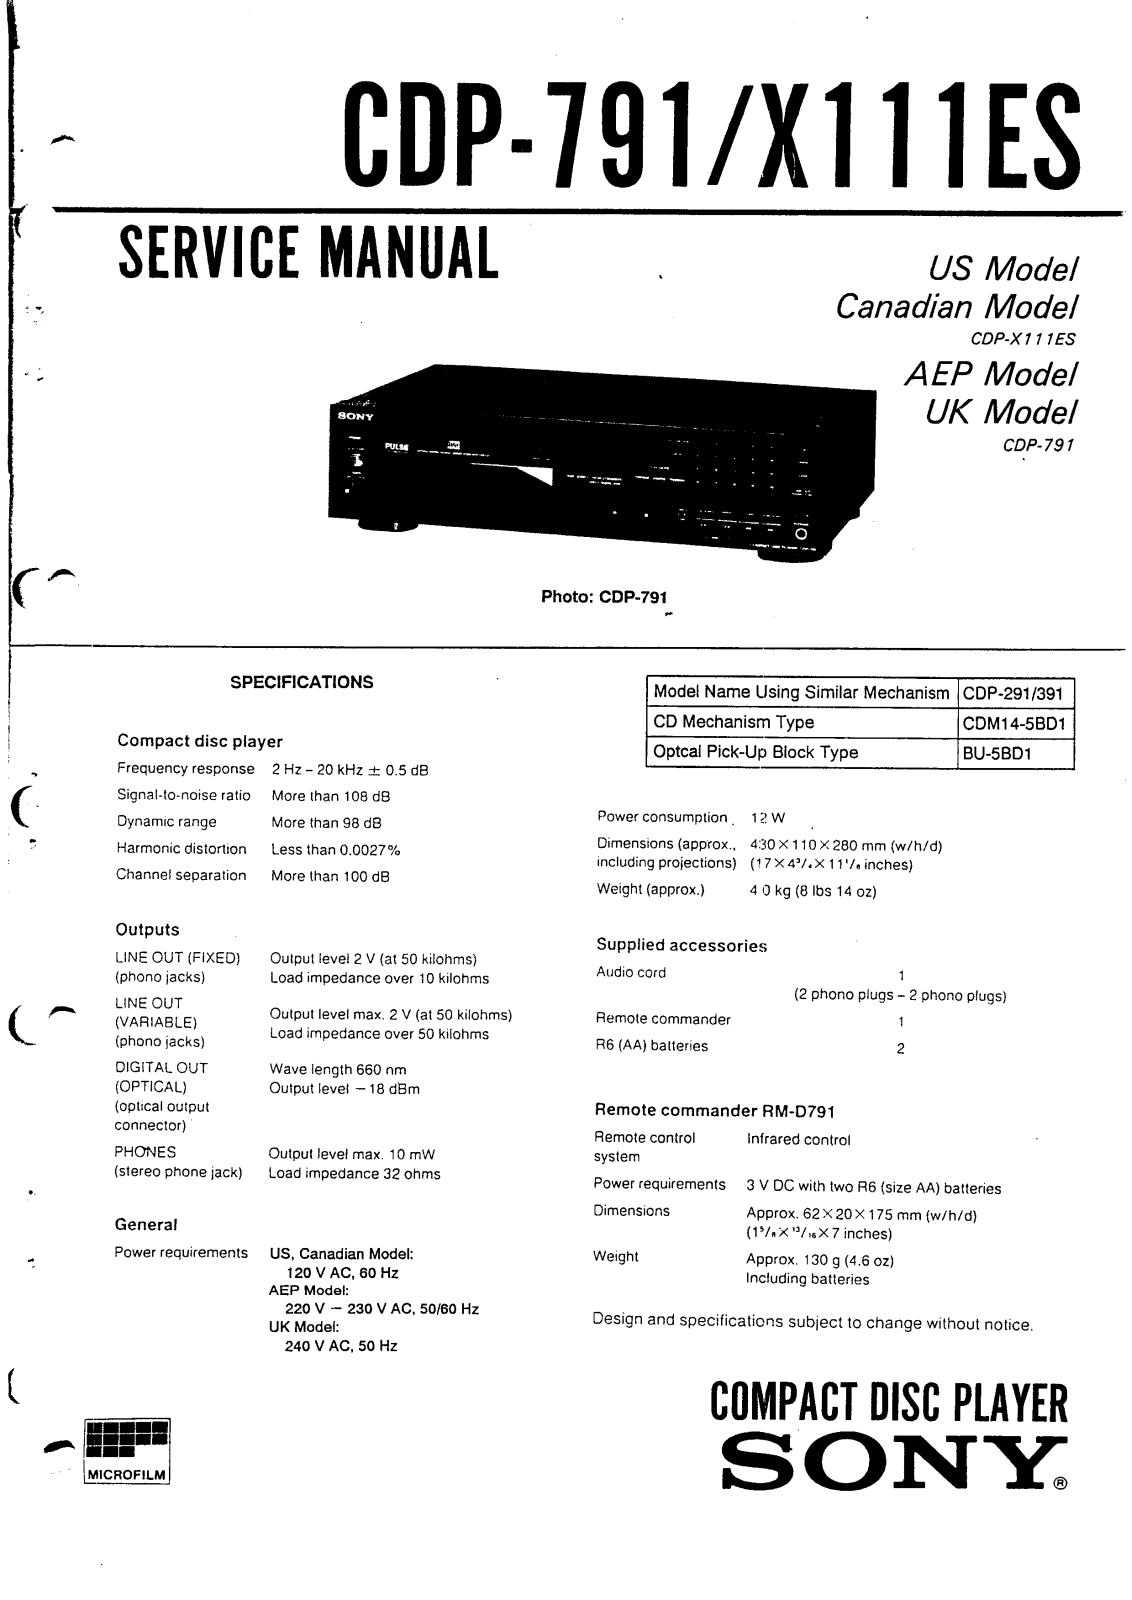 SONY CDP-791-X111ES Service Manual